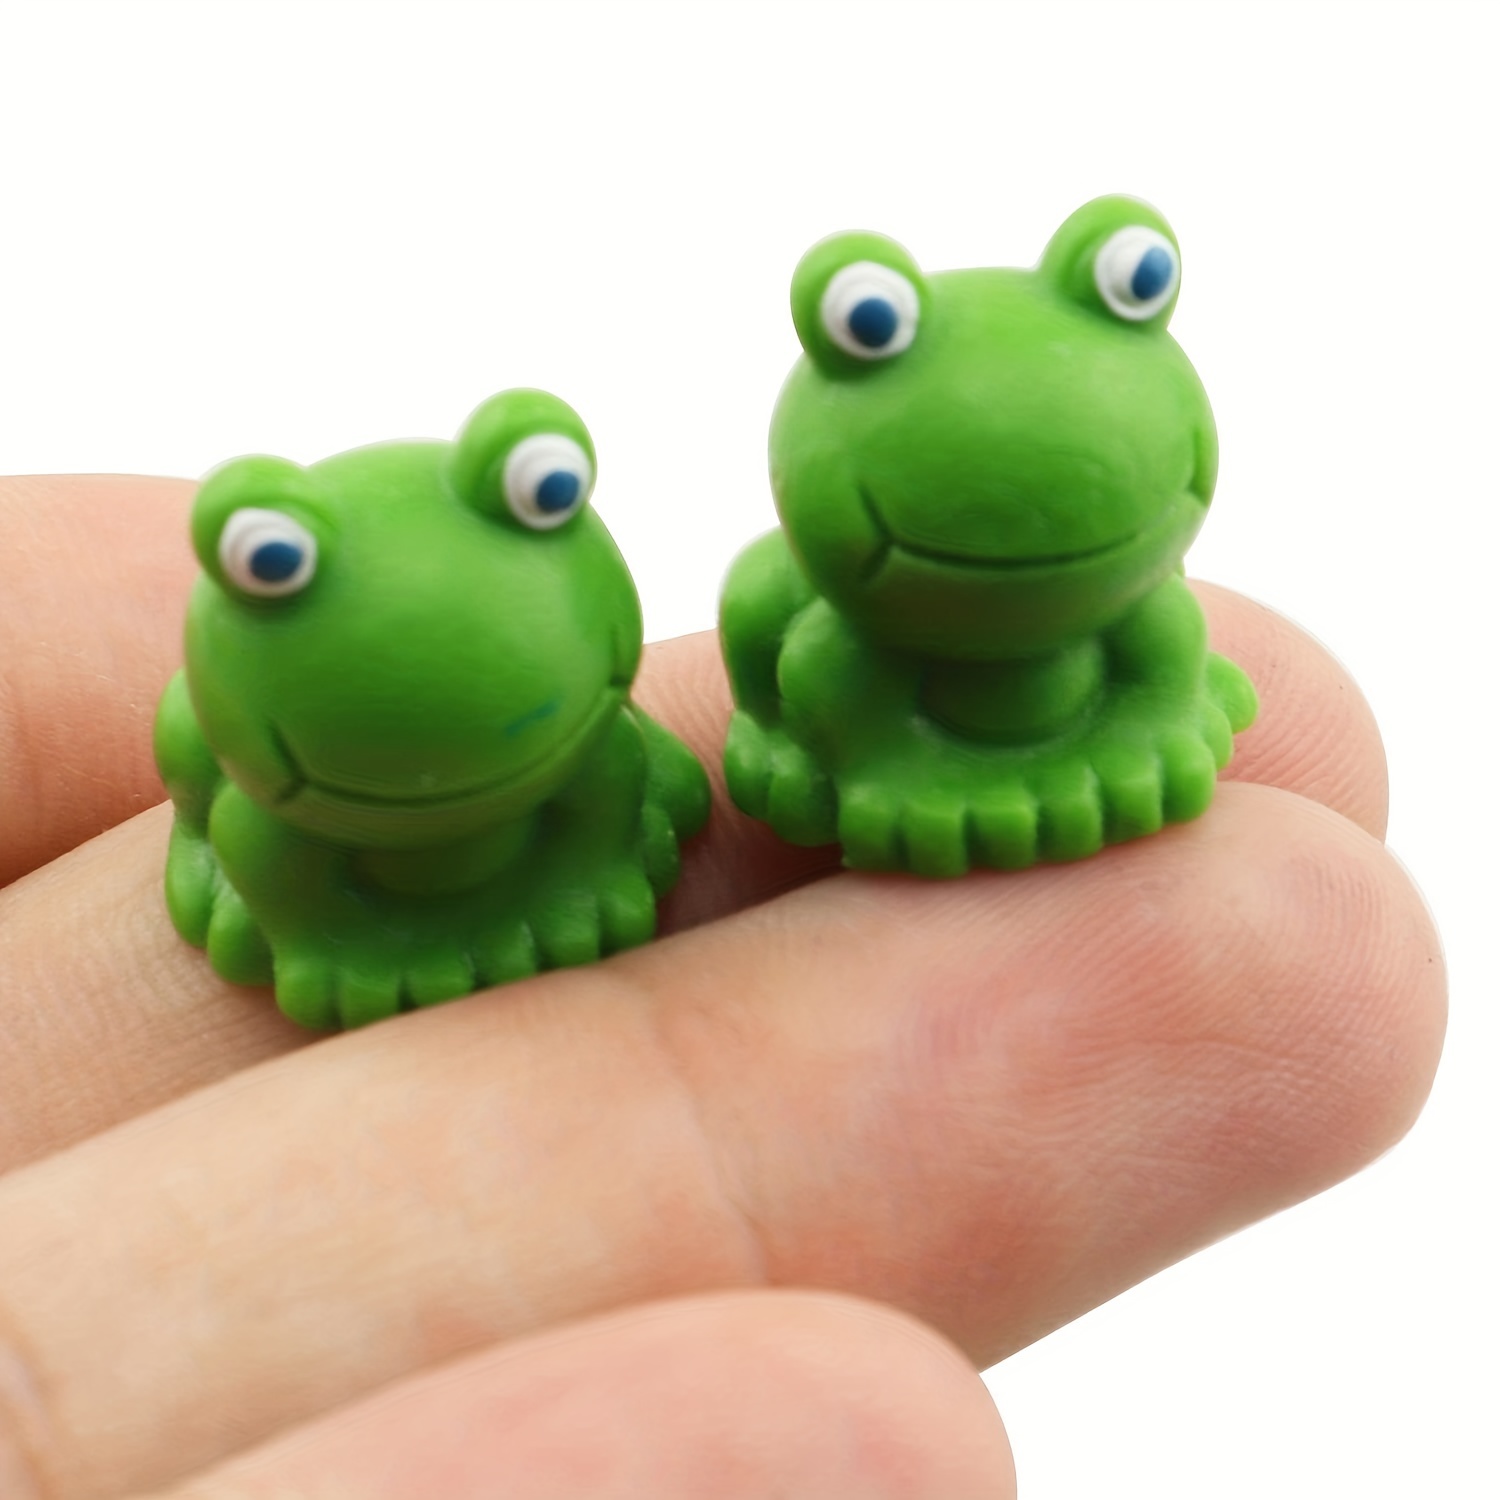  qolati 100PCS Mini Frog Figurines, Resin Mini Frog Statues,  Tale Garden Mini Moss DIY Crafts Accessories, Fairy Garden Miniature  Animals Model, Happy Mini Kit, for Home Garden Decor, Parties : Patio